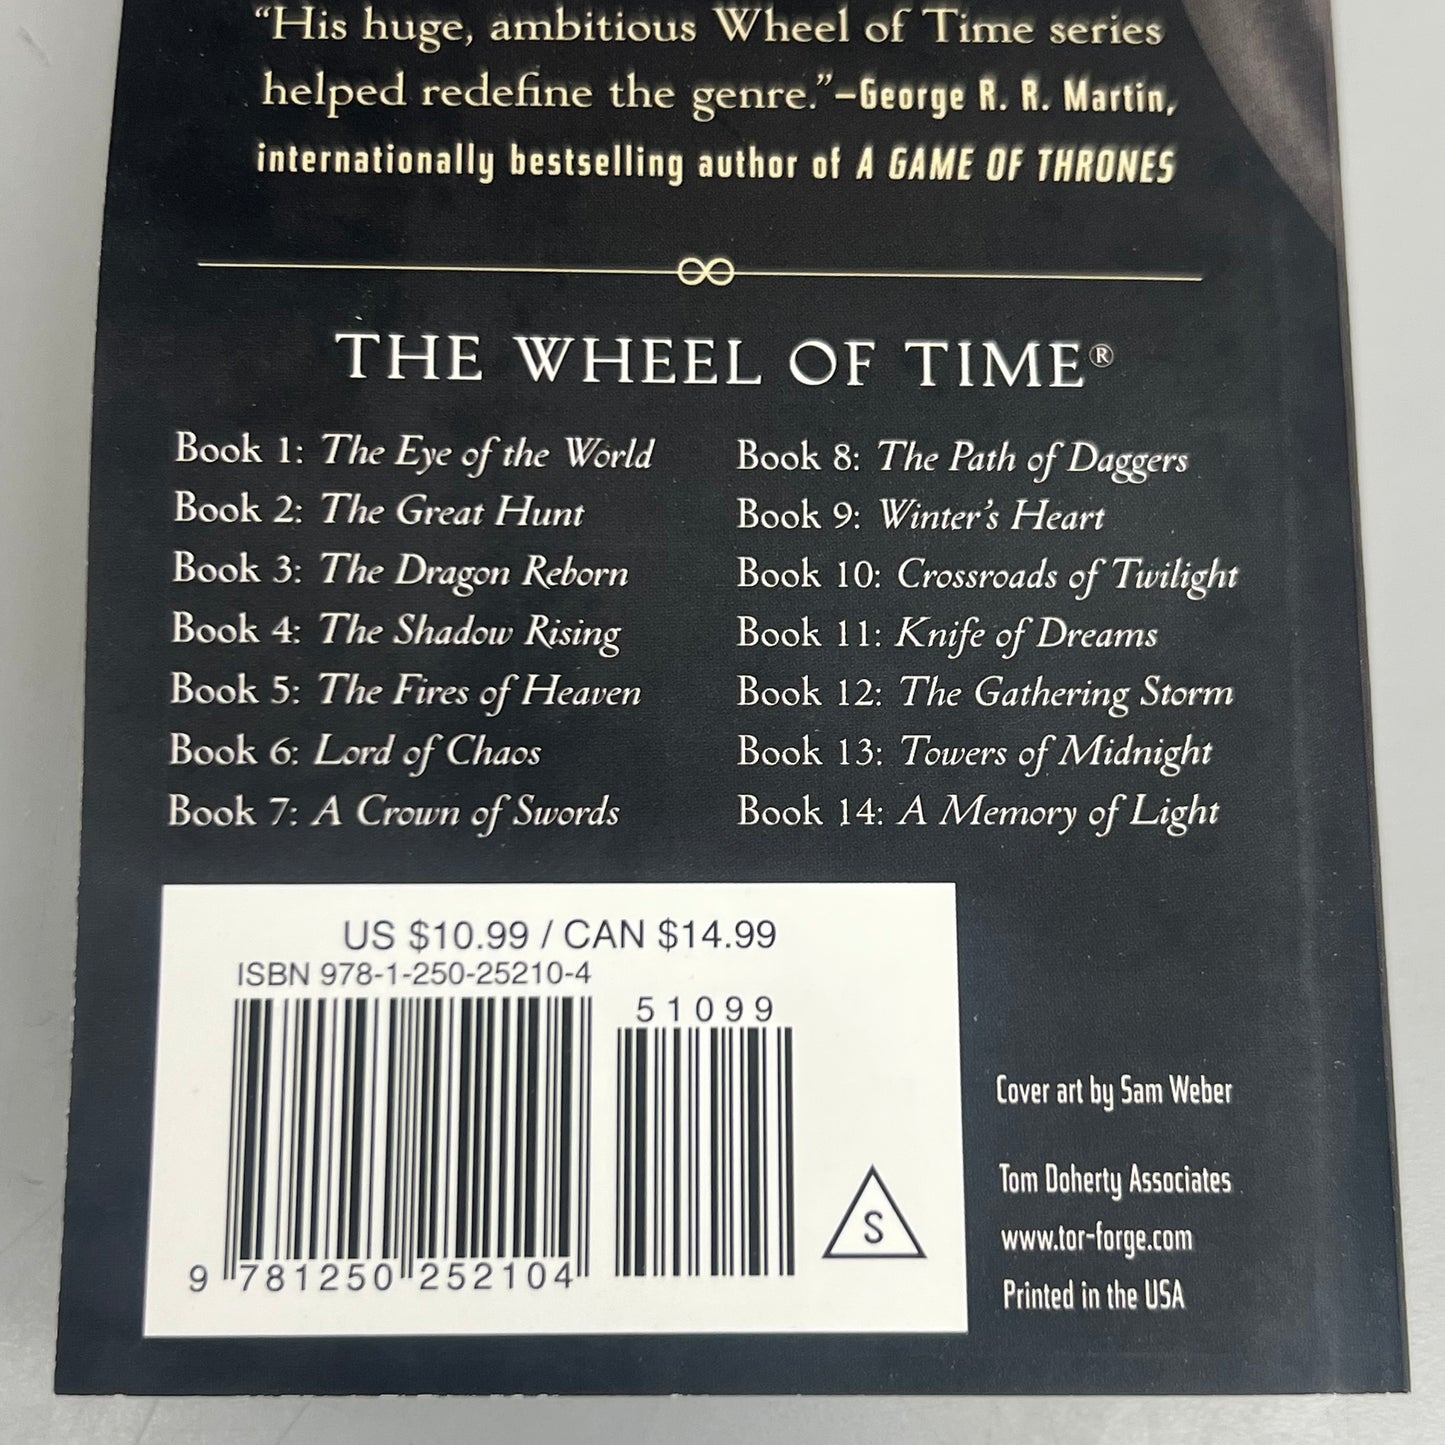 ROBERT JORDAN The Wheel of Time Boxed Set lll: Books 7-9